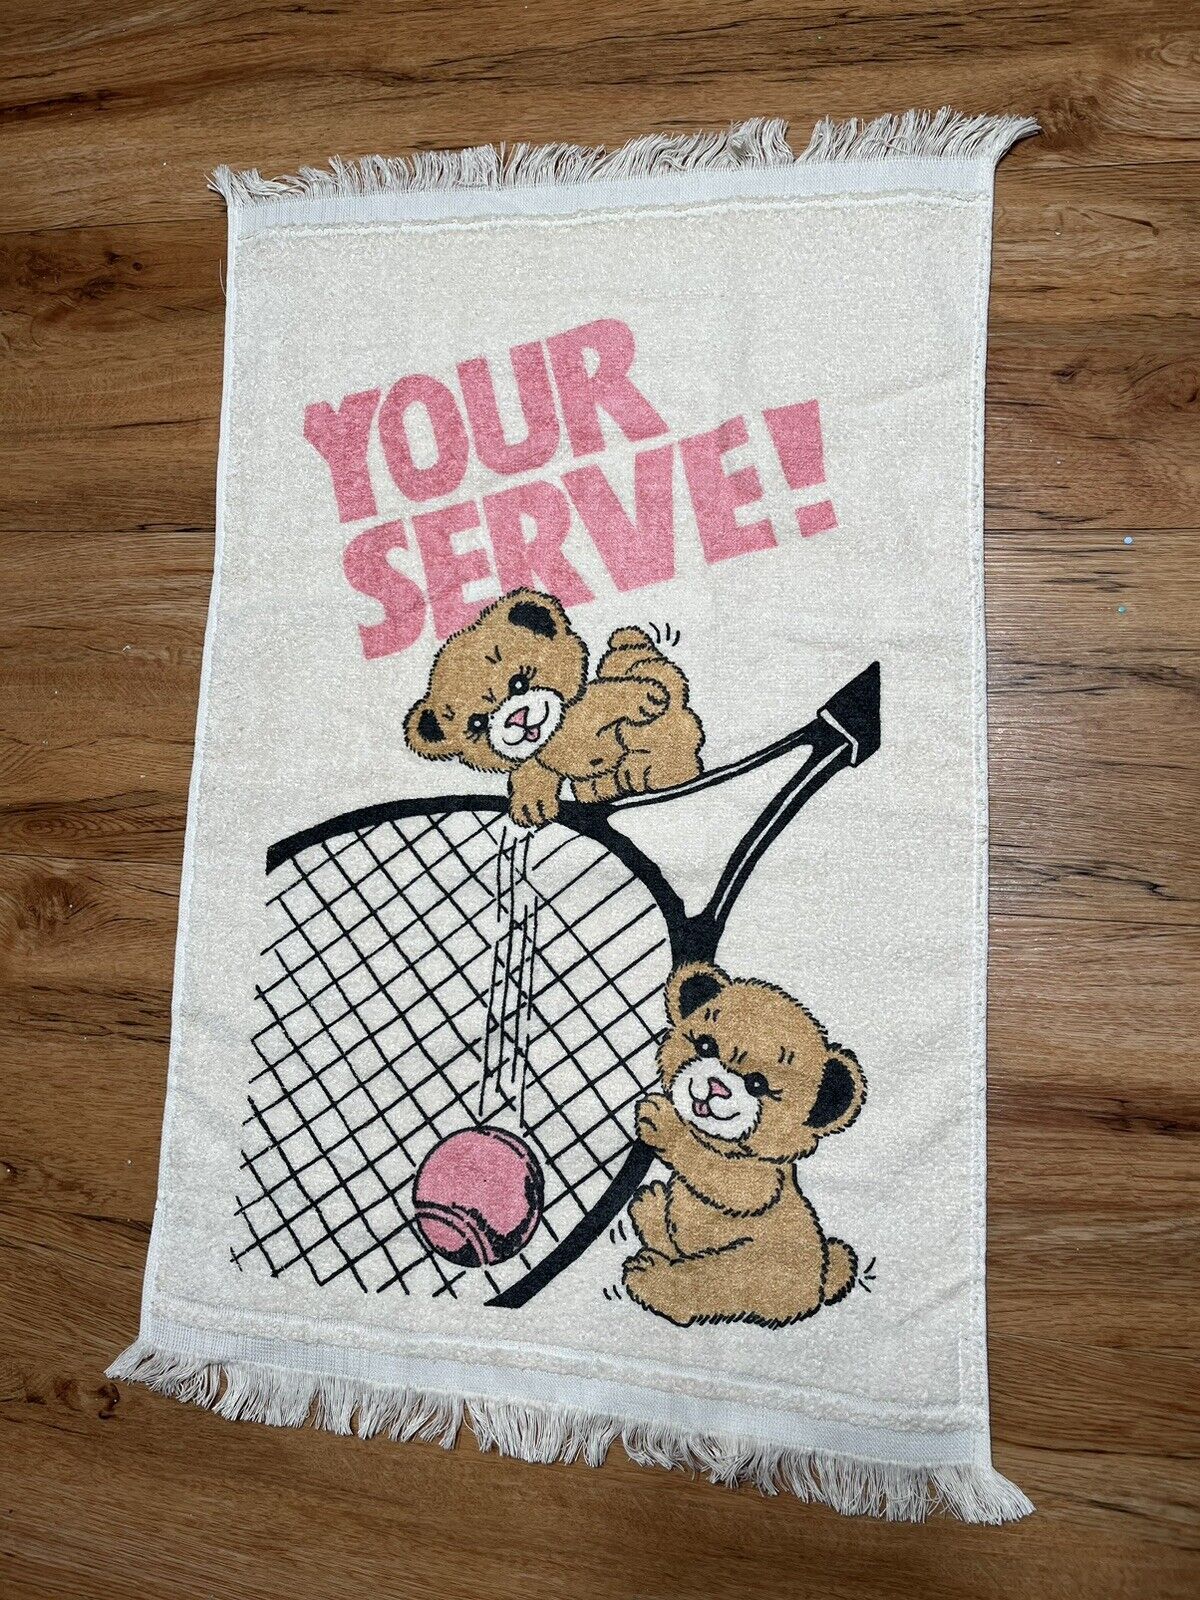 Tennis Towel Teddy Bears Vintage Graphic Cartoon Print Excellent Condition 